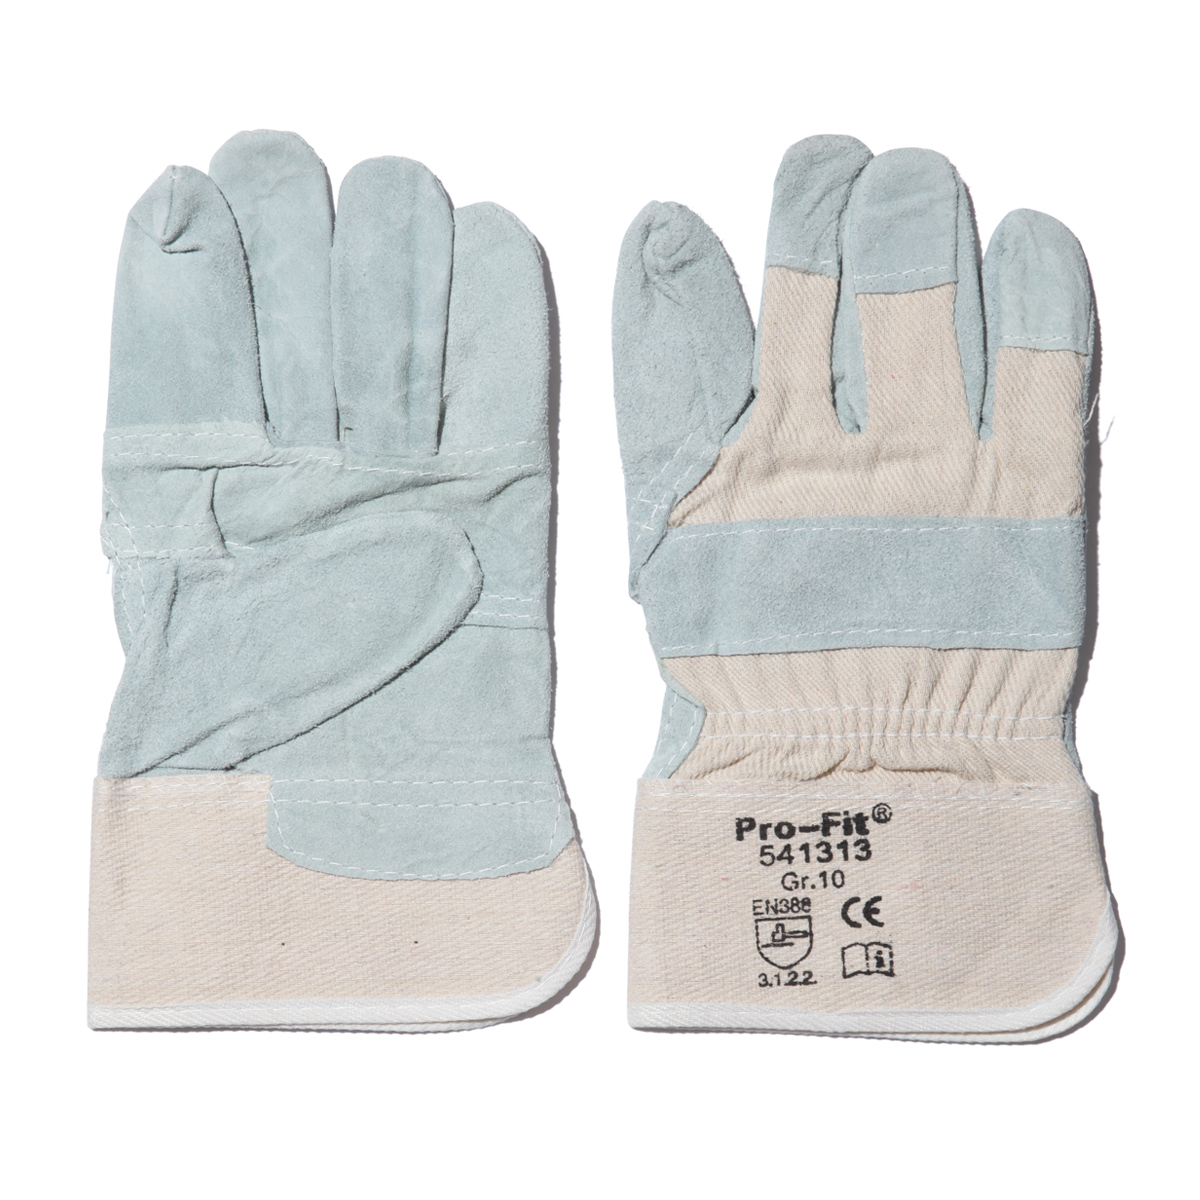 Split leather glove | GENERAL VIEW